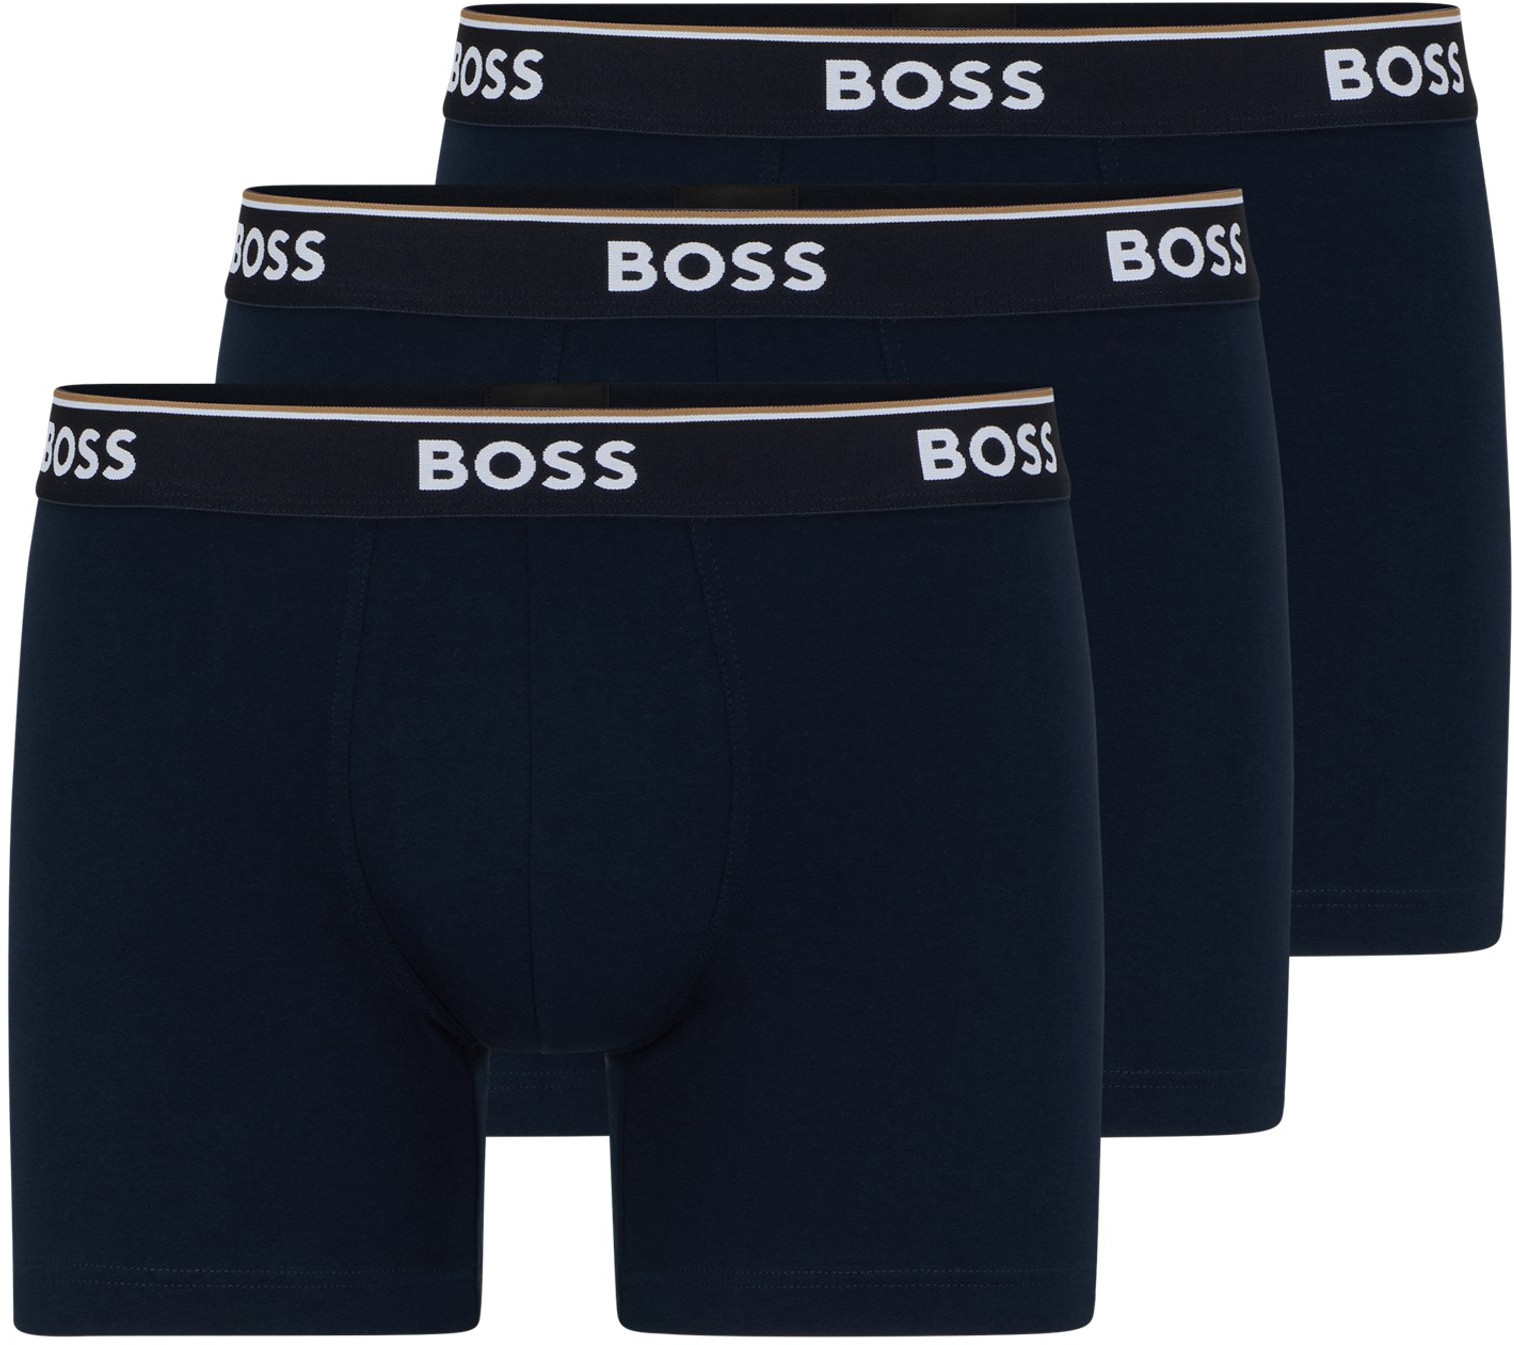 Hugo Boss 3 PACK - pánské boxerky BOSS 50475282-480 L